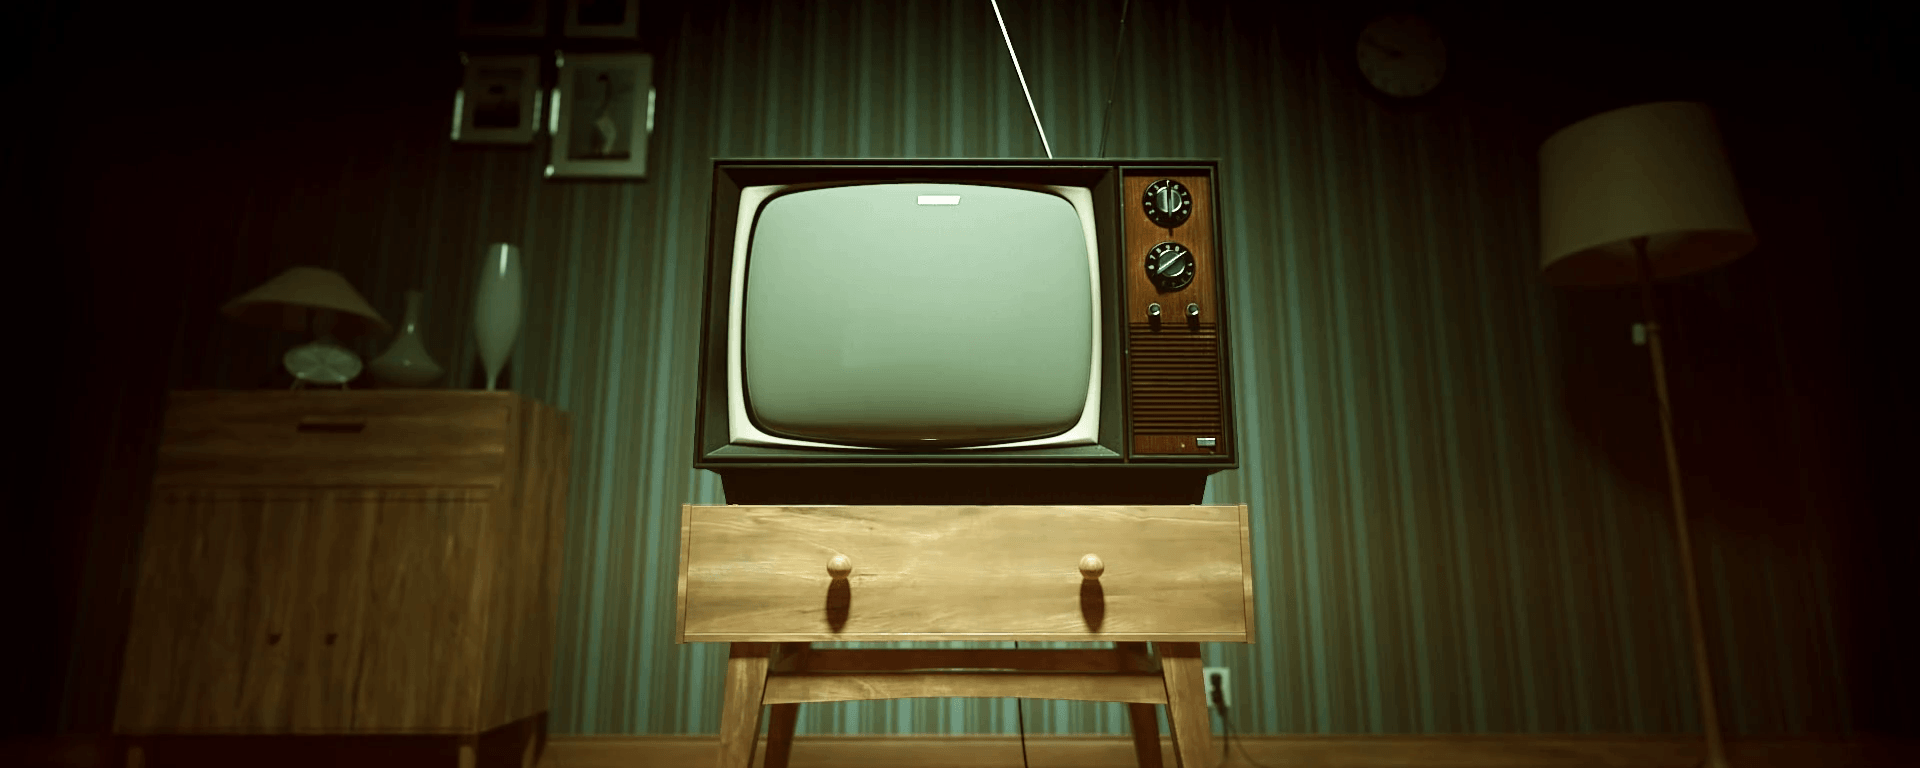 Television Retro